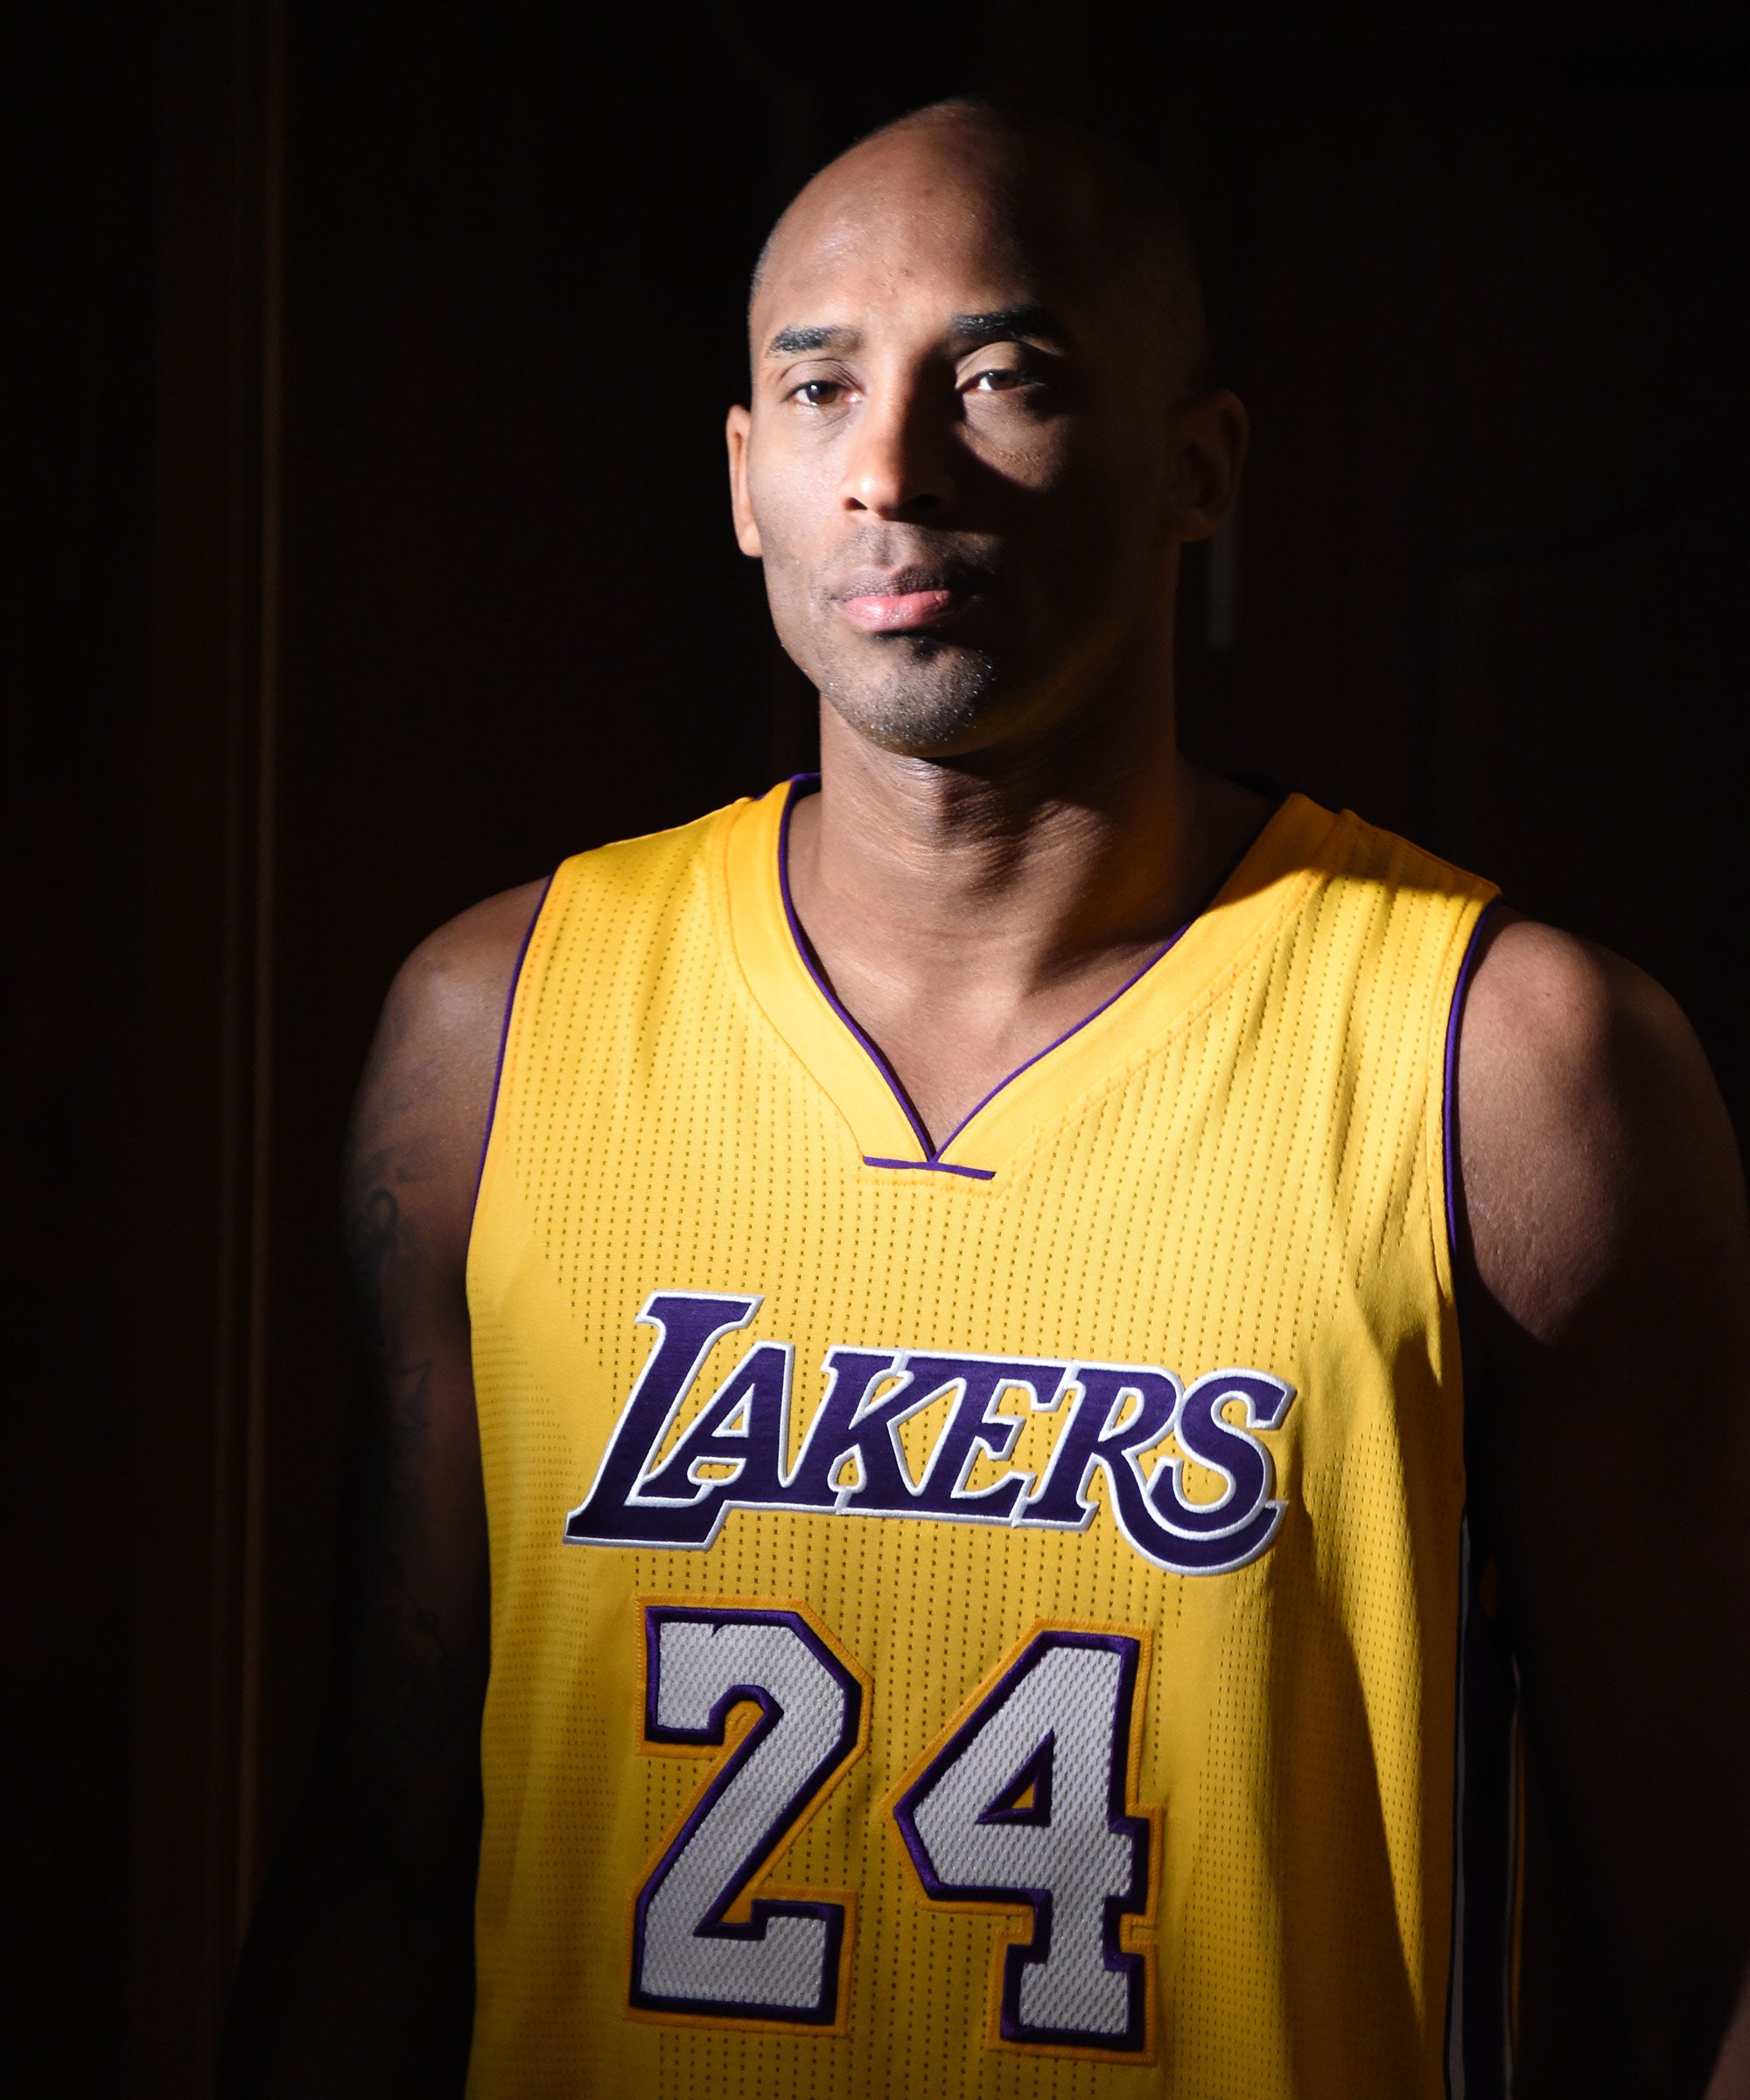 Ex-NBA star's emotional tribute to Kobe Bryant 